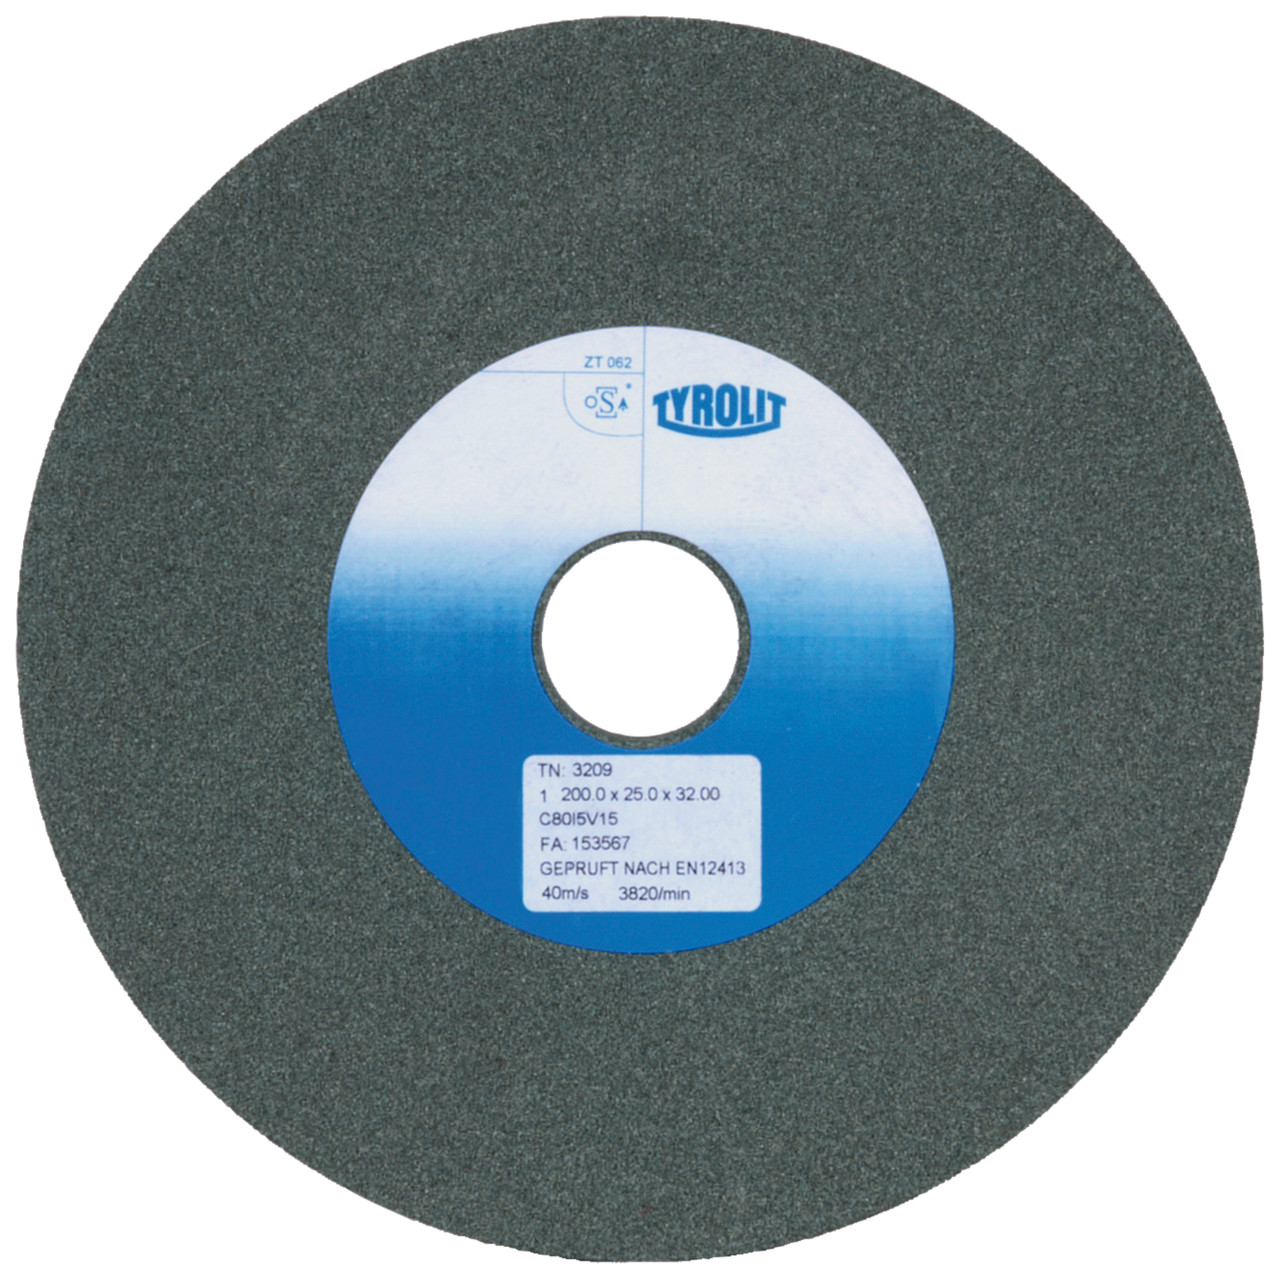 TYROLIT discos de desbaste cerámicos convencionales DxDxH 150x20x32 Para metales no férricos, forma: 1, Art. 34287483